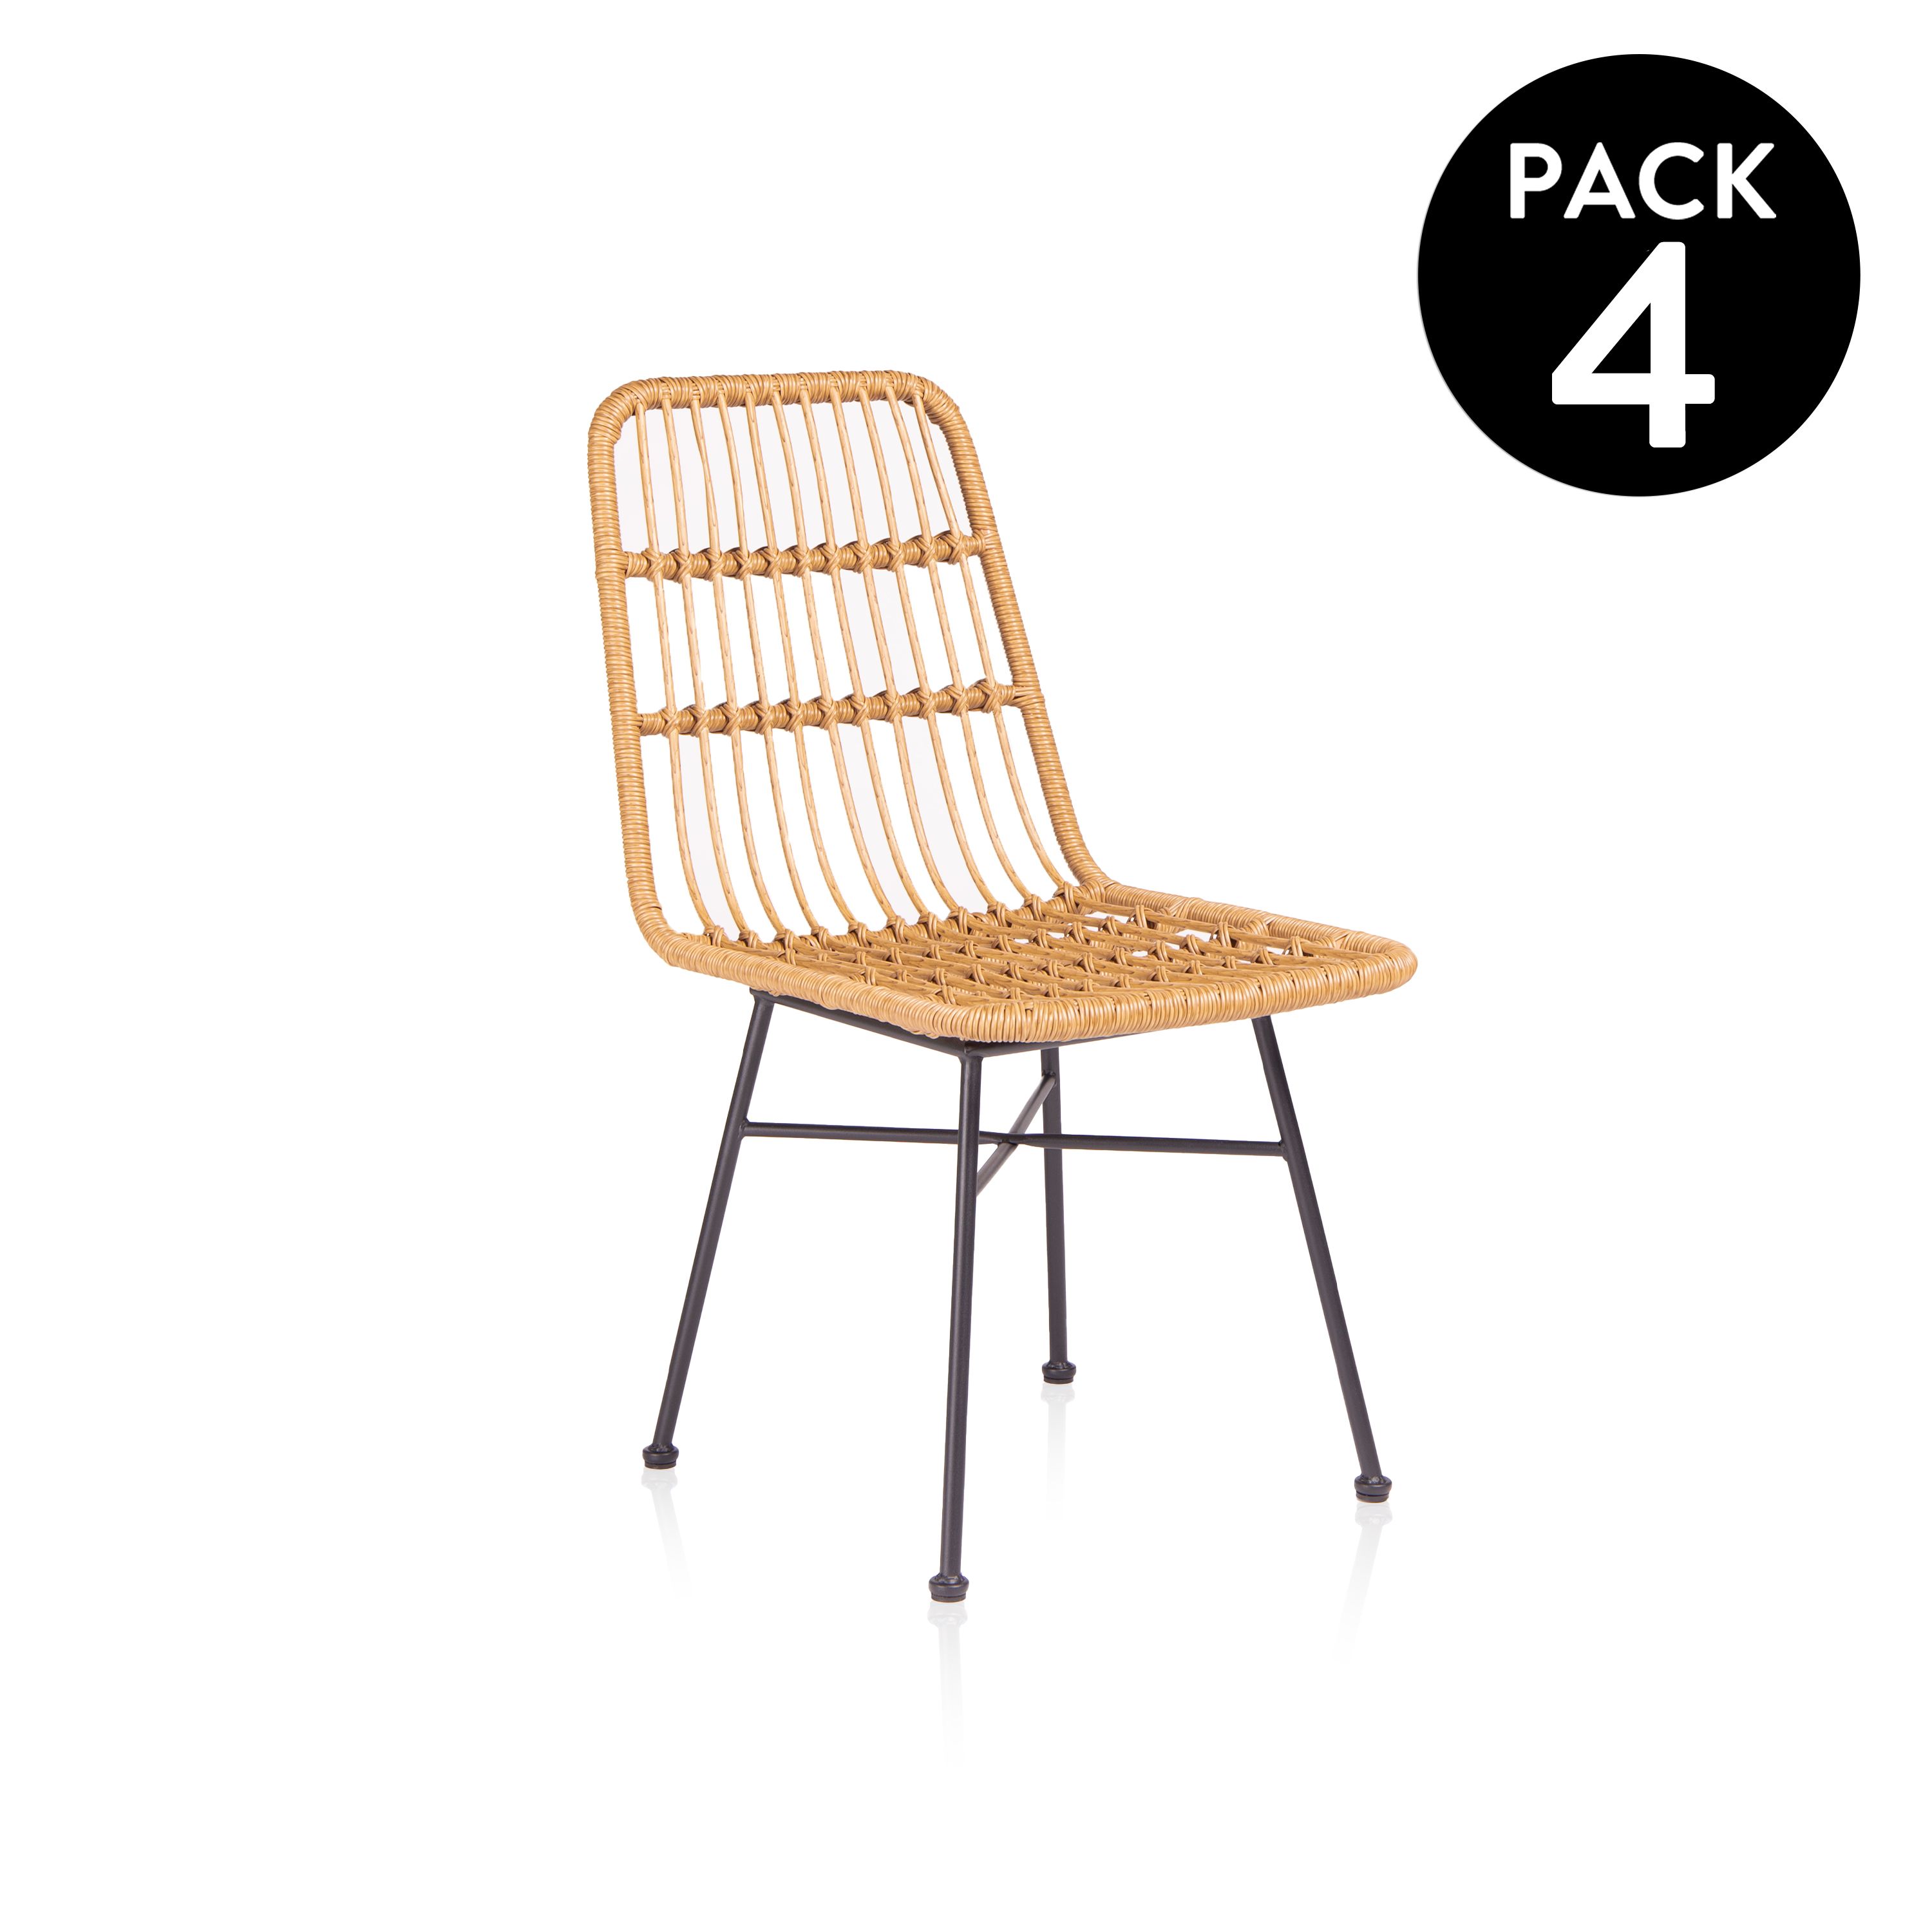 Pack 4 sillas de comedor Malai